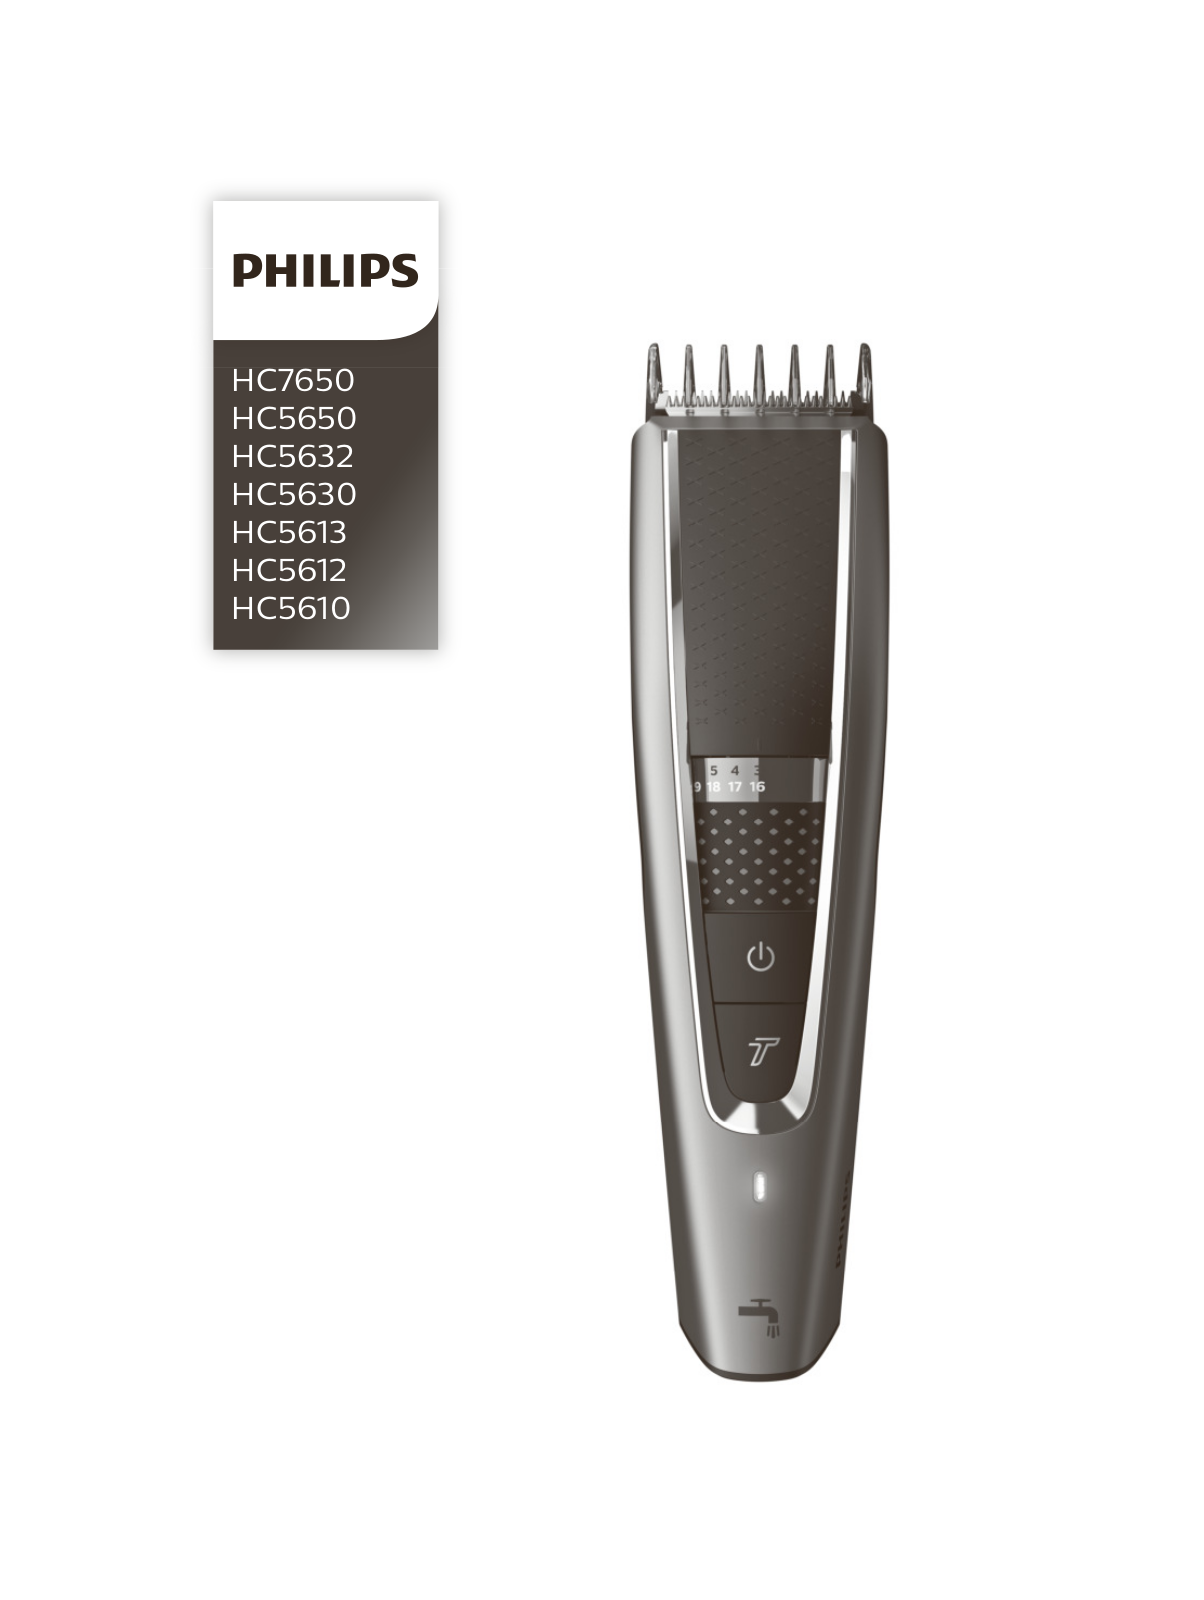 Philips HC5650, HC5630, HC7650, HC5613, HC5632 User Manual